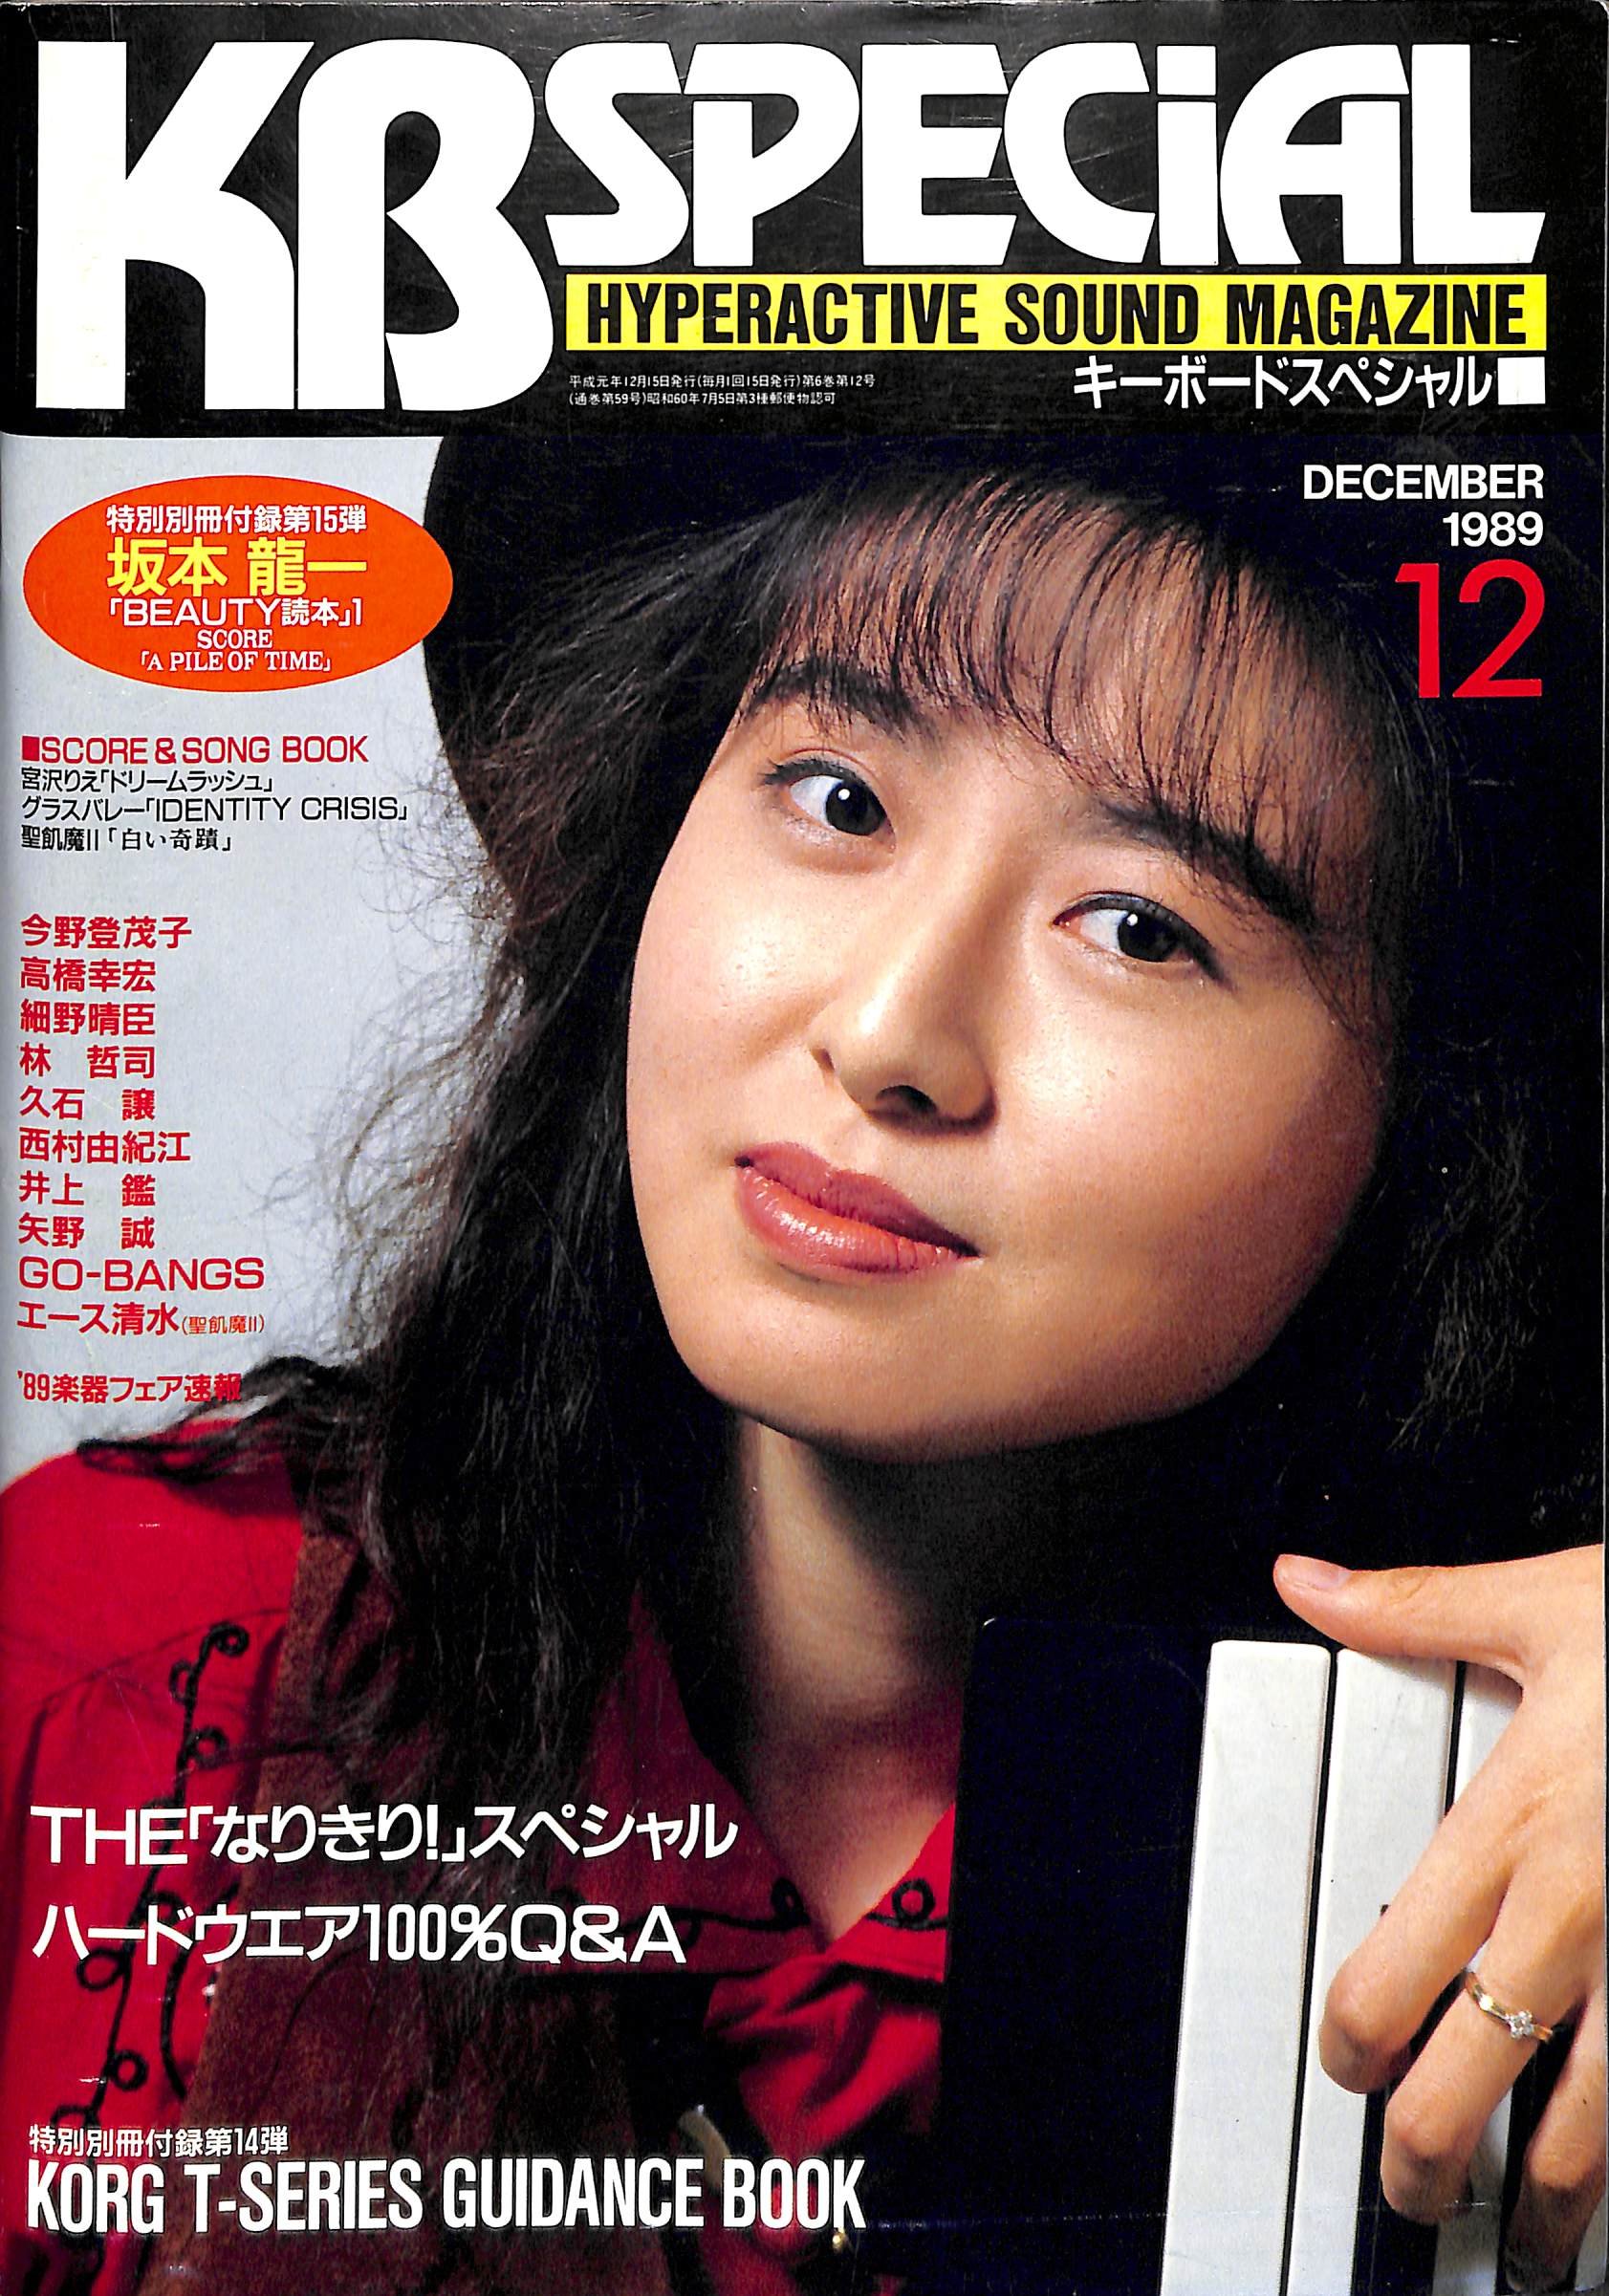 Blog. 「KB SPECiAL キーボード・スペシャル 1989年12月号」久石譲連載